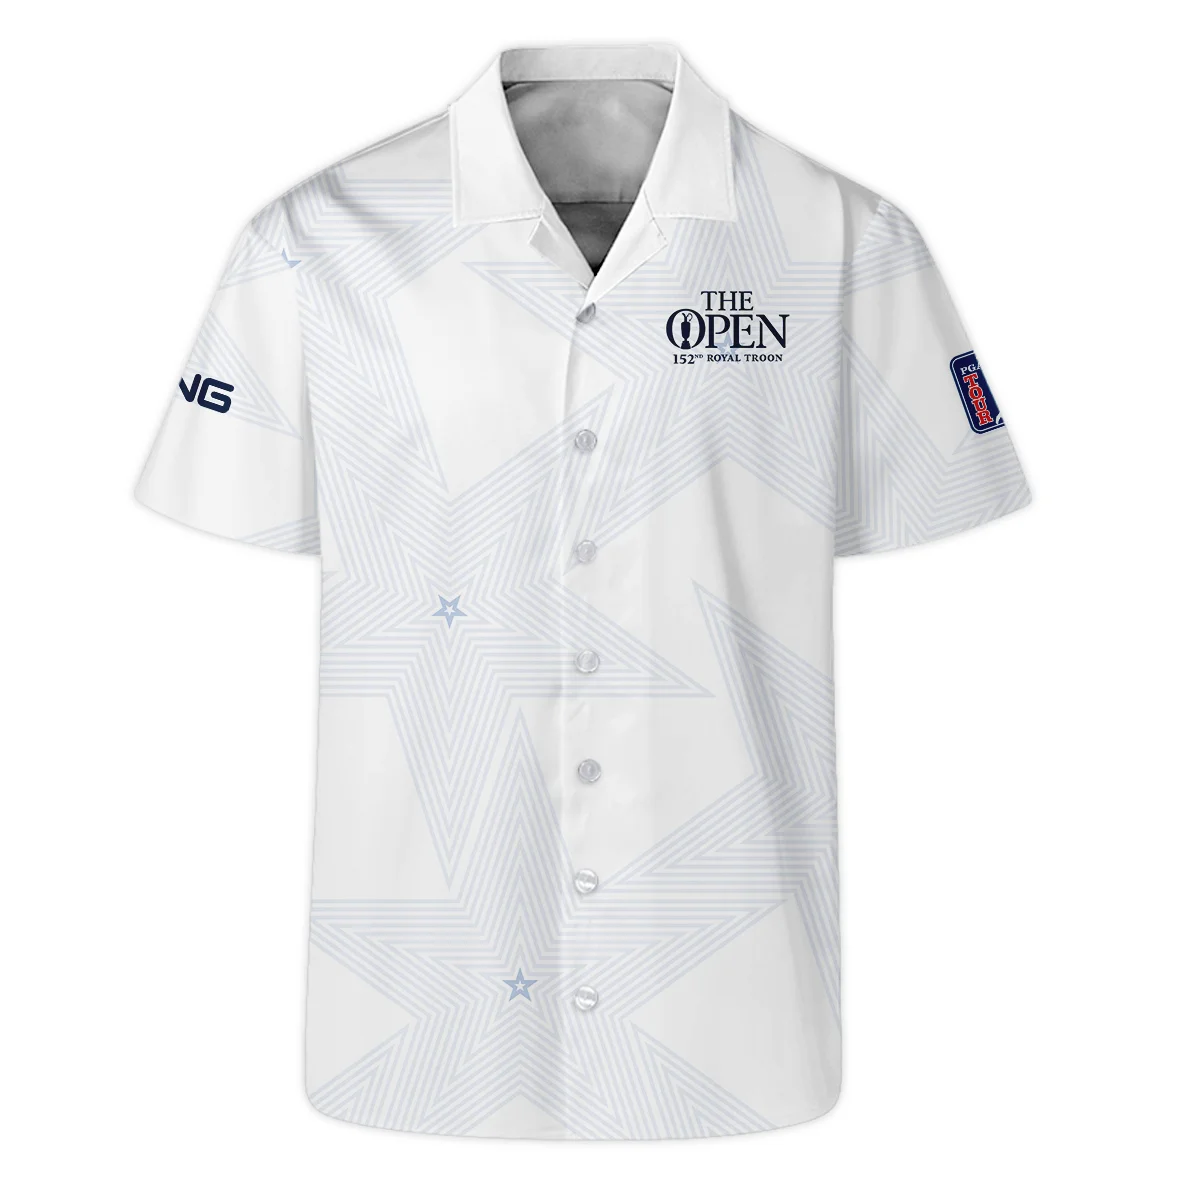 152nd The Open Championship Golf Ping Unisex Sweatshirt Stars White Navy Golf Sports All Over Print Sweatshirt